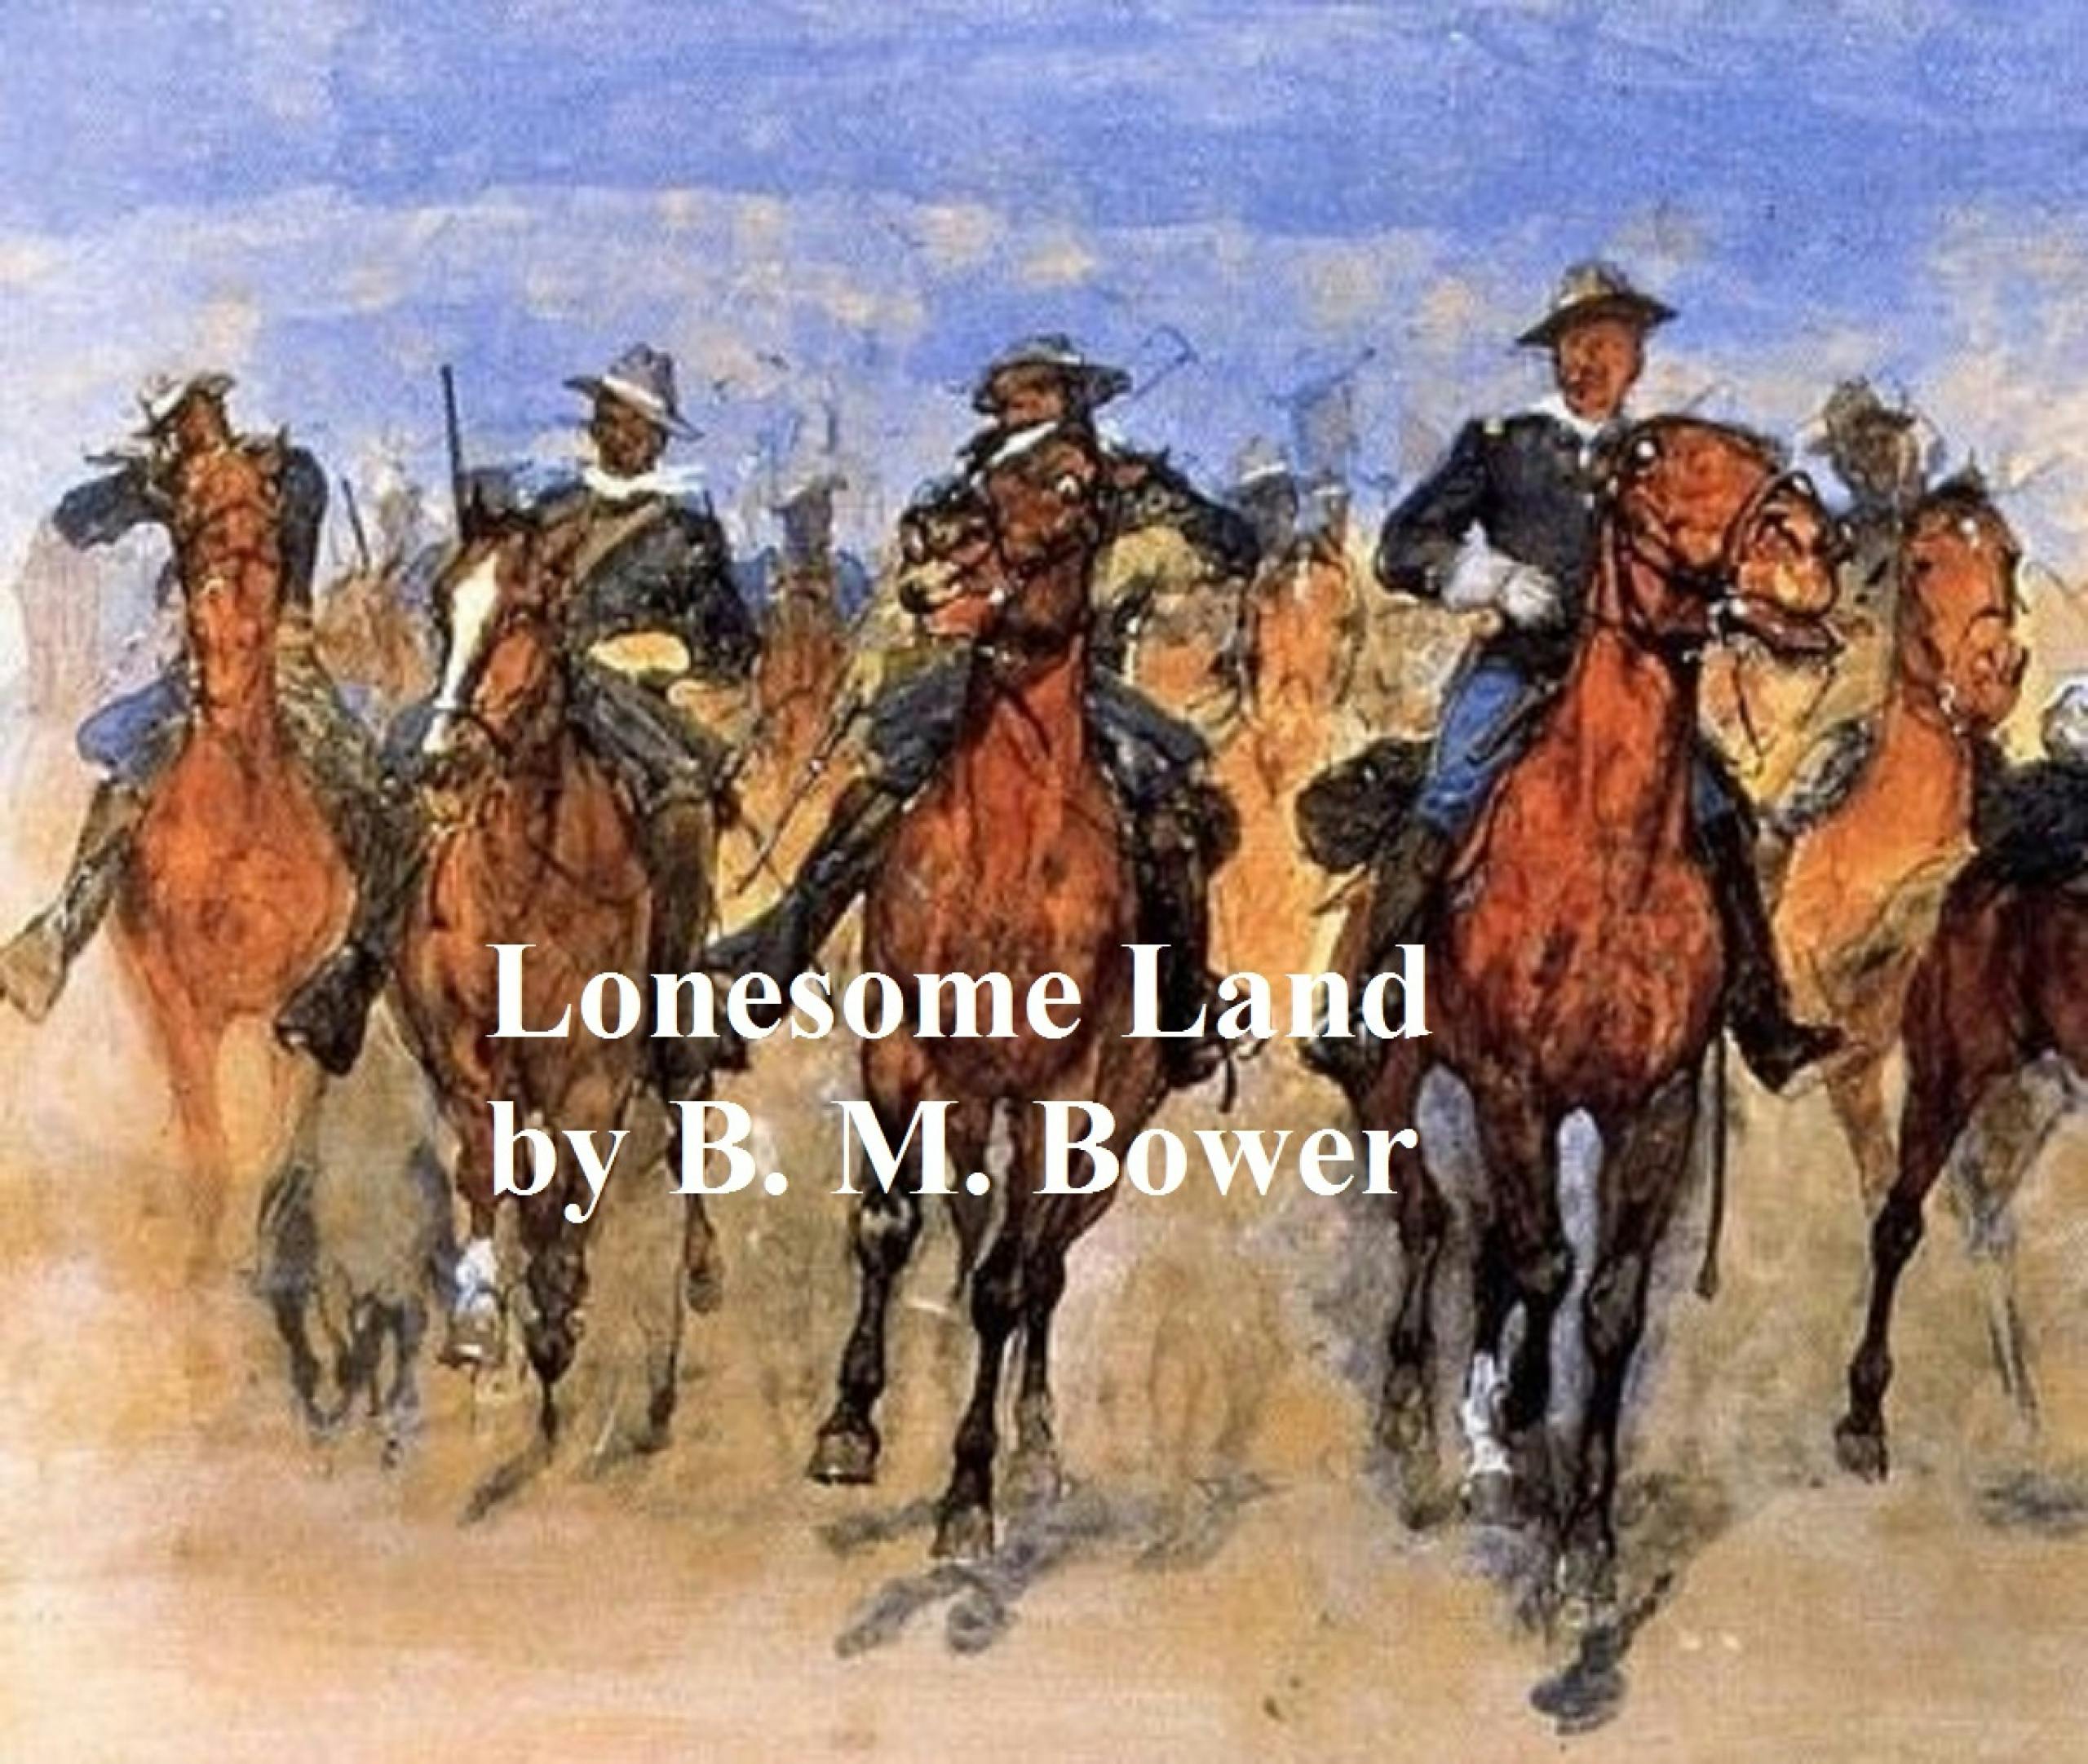 Lonesome Land - B. M. Bower